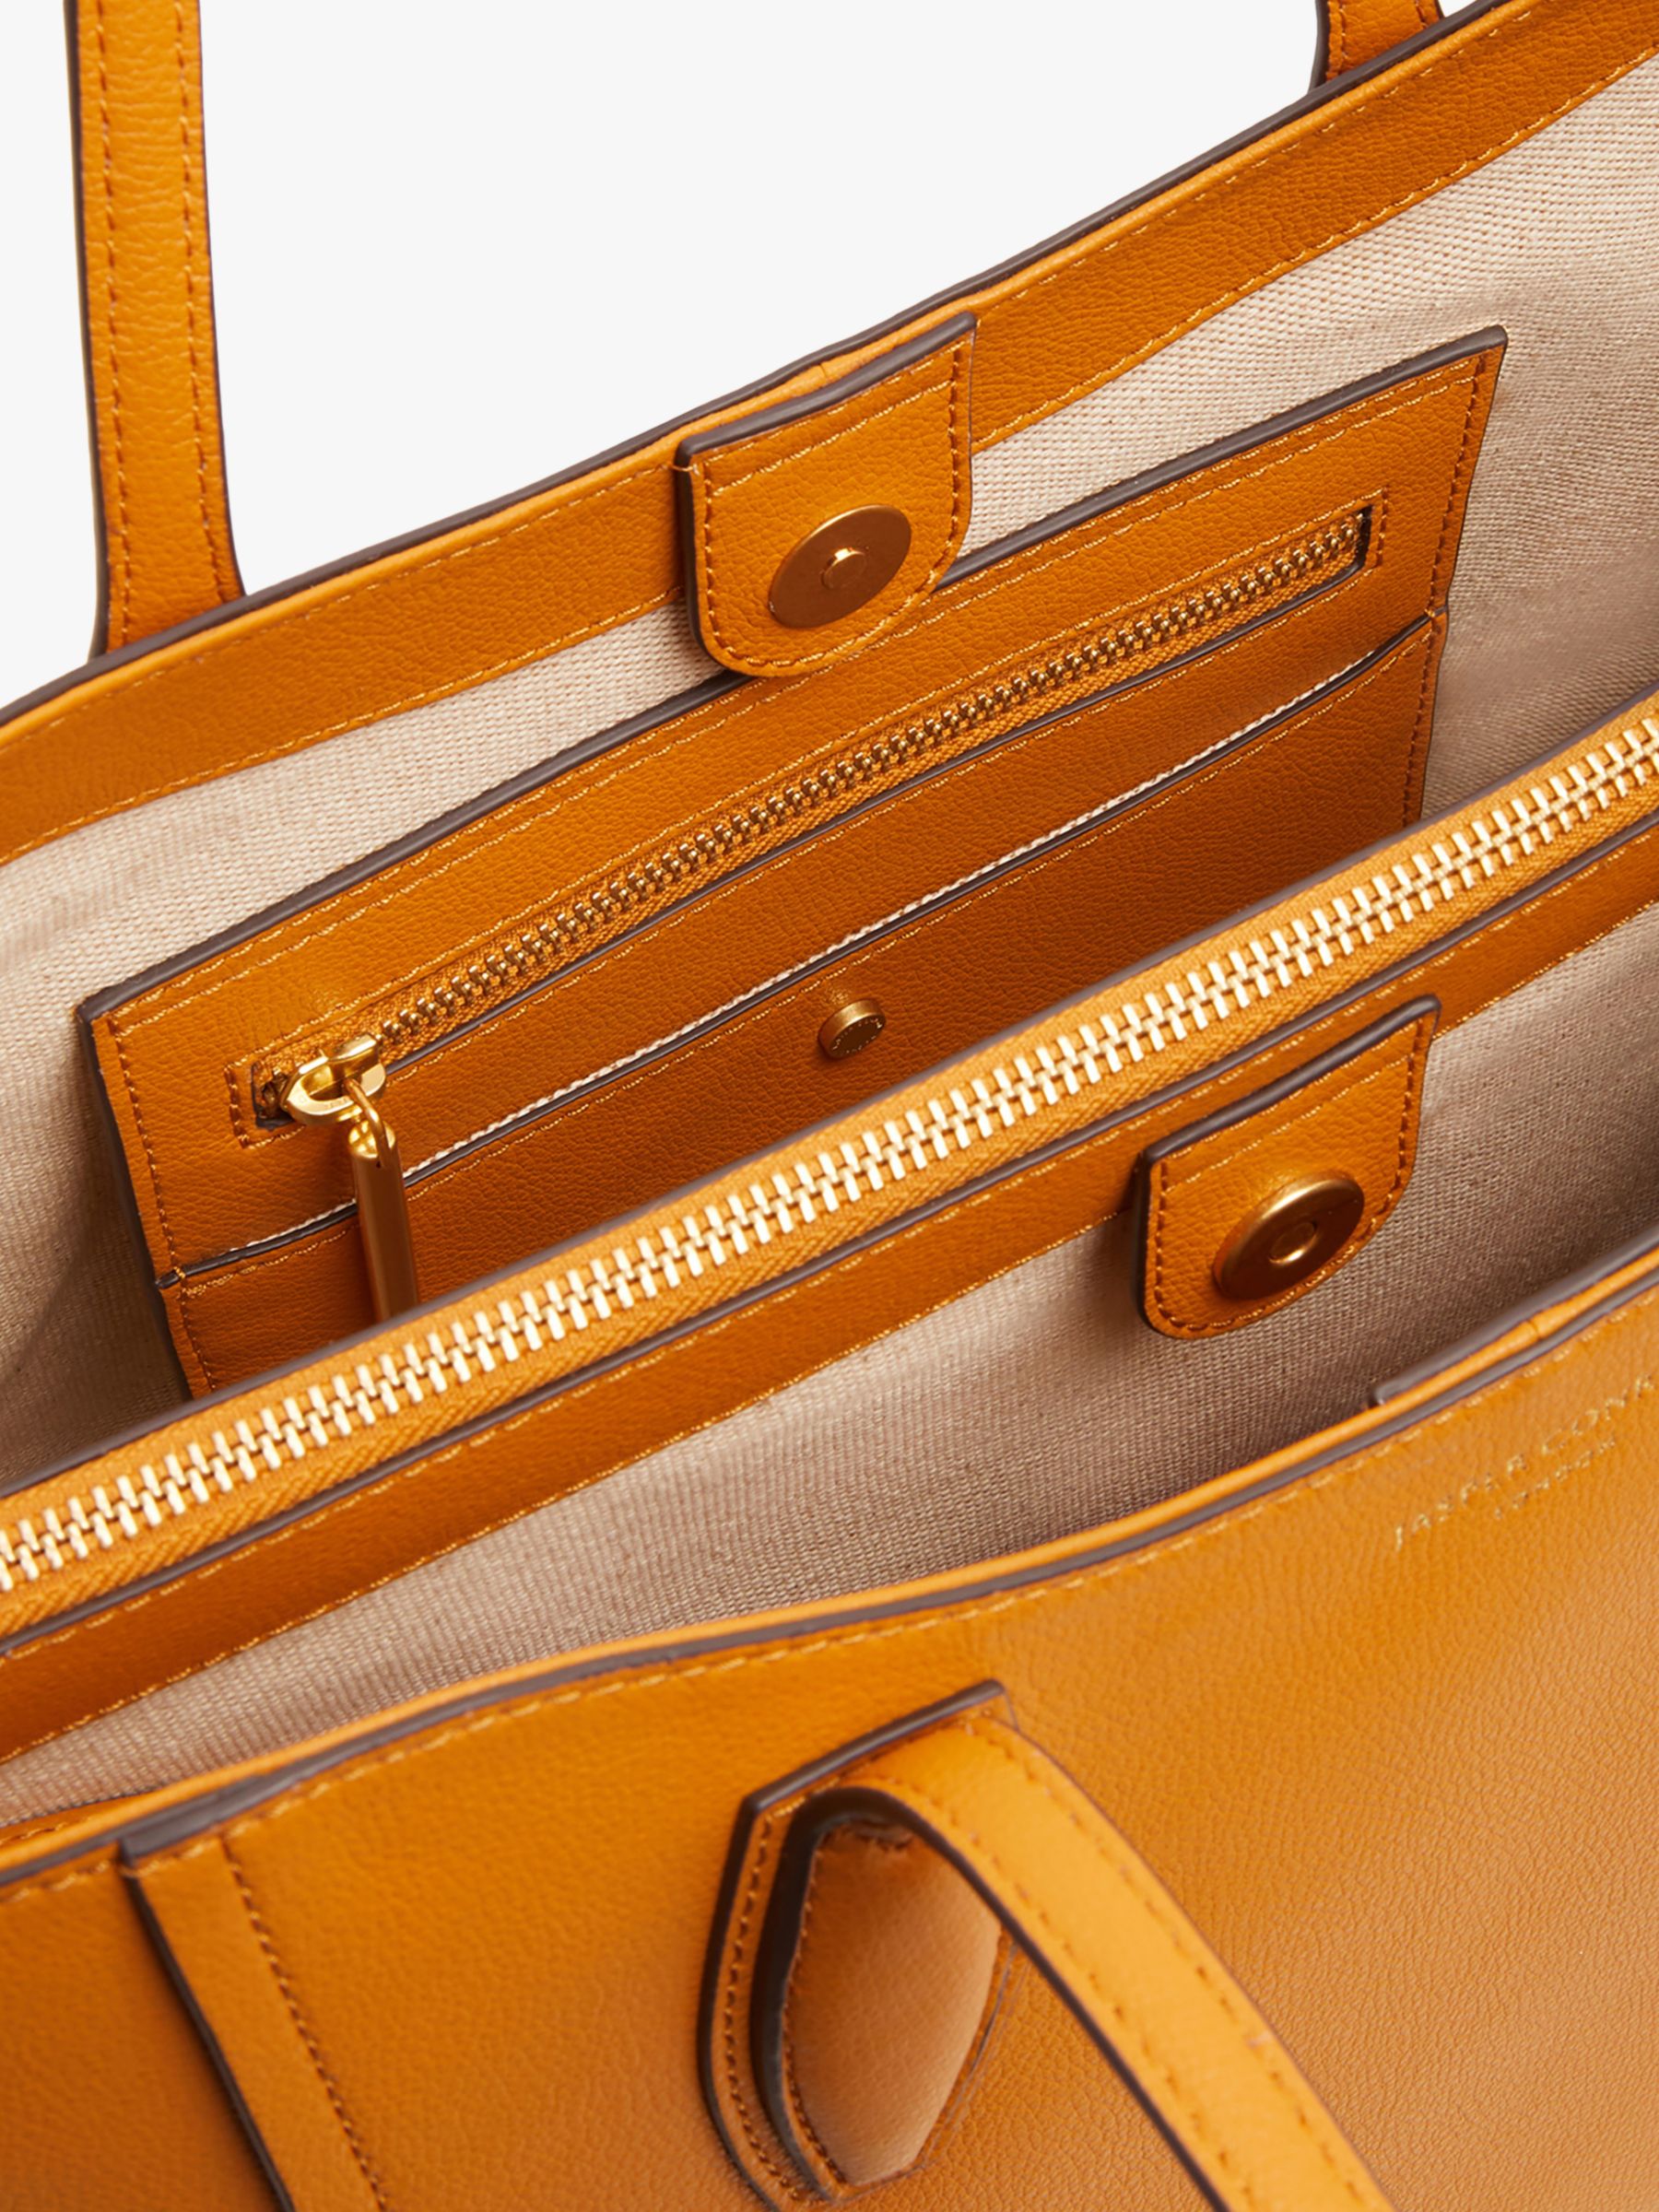 Buy Jasper Conran Bryn Leather Tote Bag Online at johnlewis.com